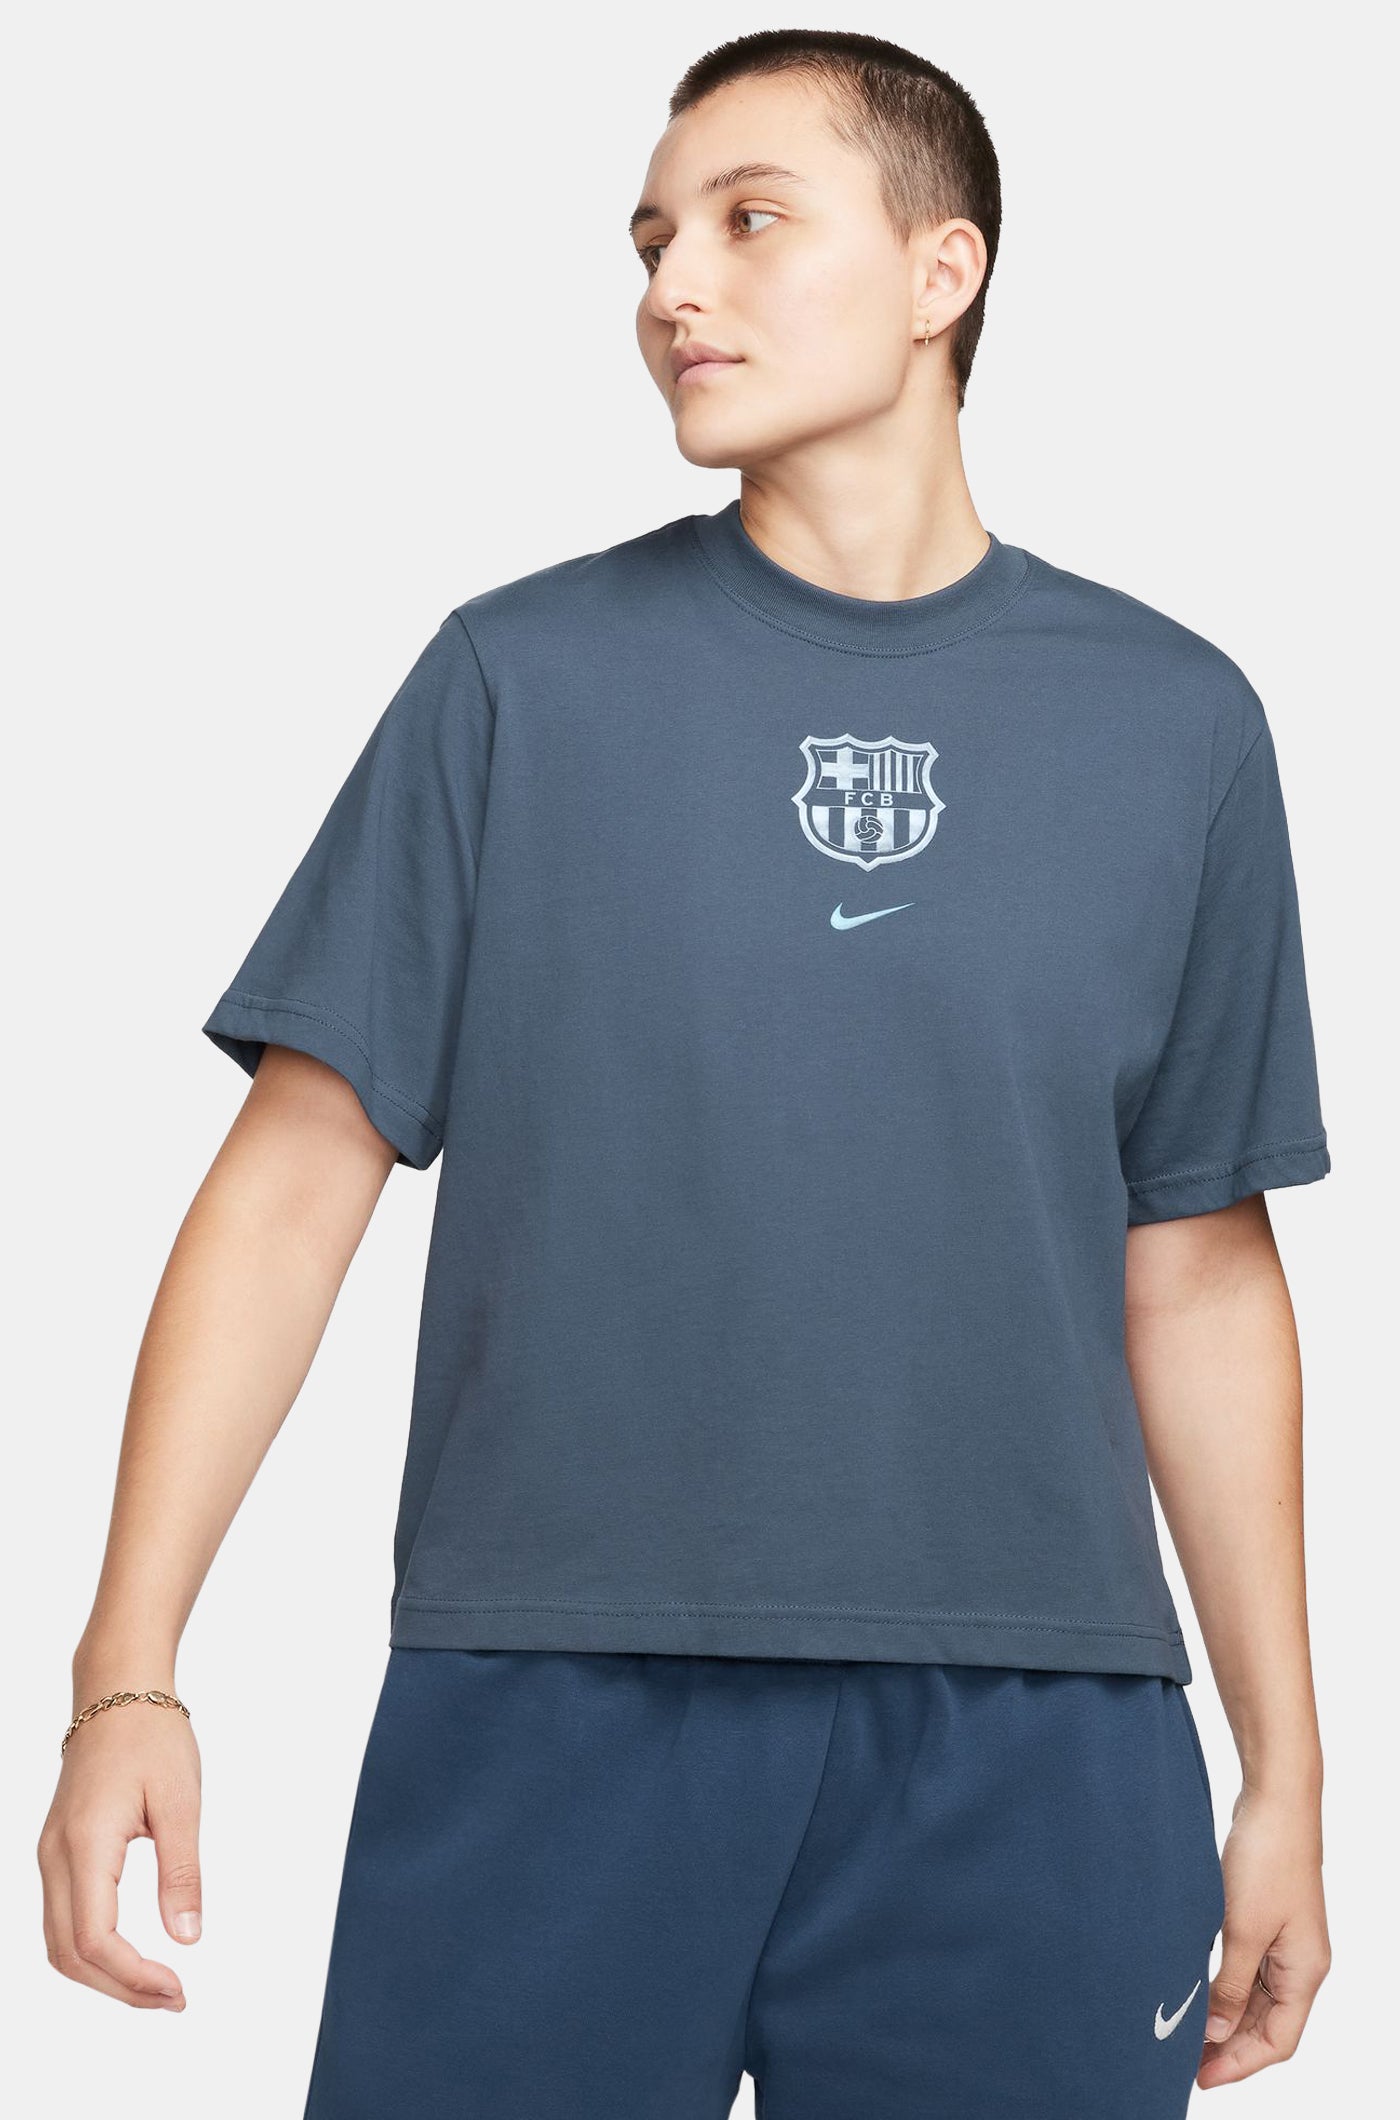 T-shirt blue Barça Nike - Women